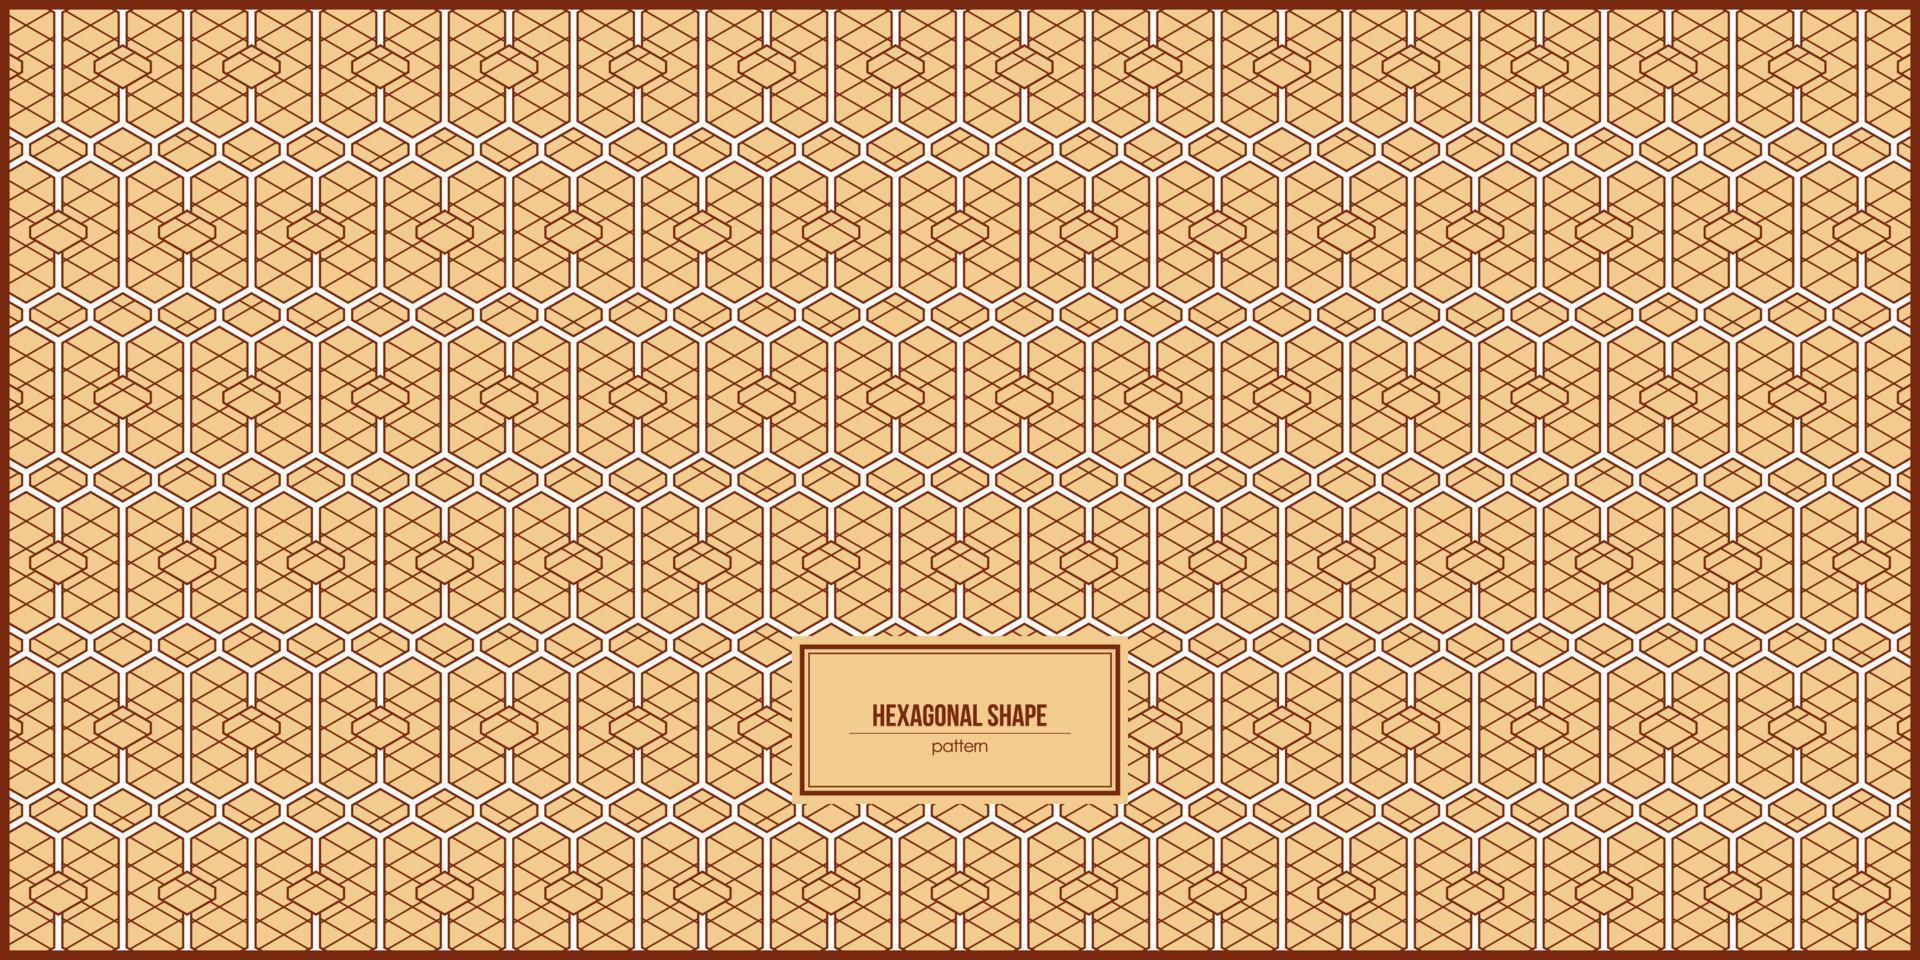 patrón hexagonal con color marrón dominante vector